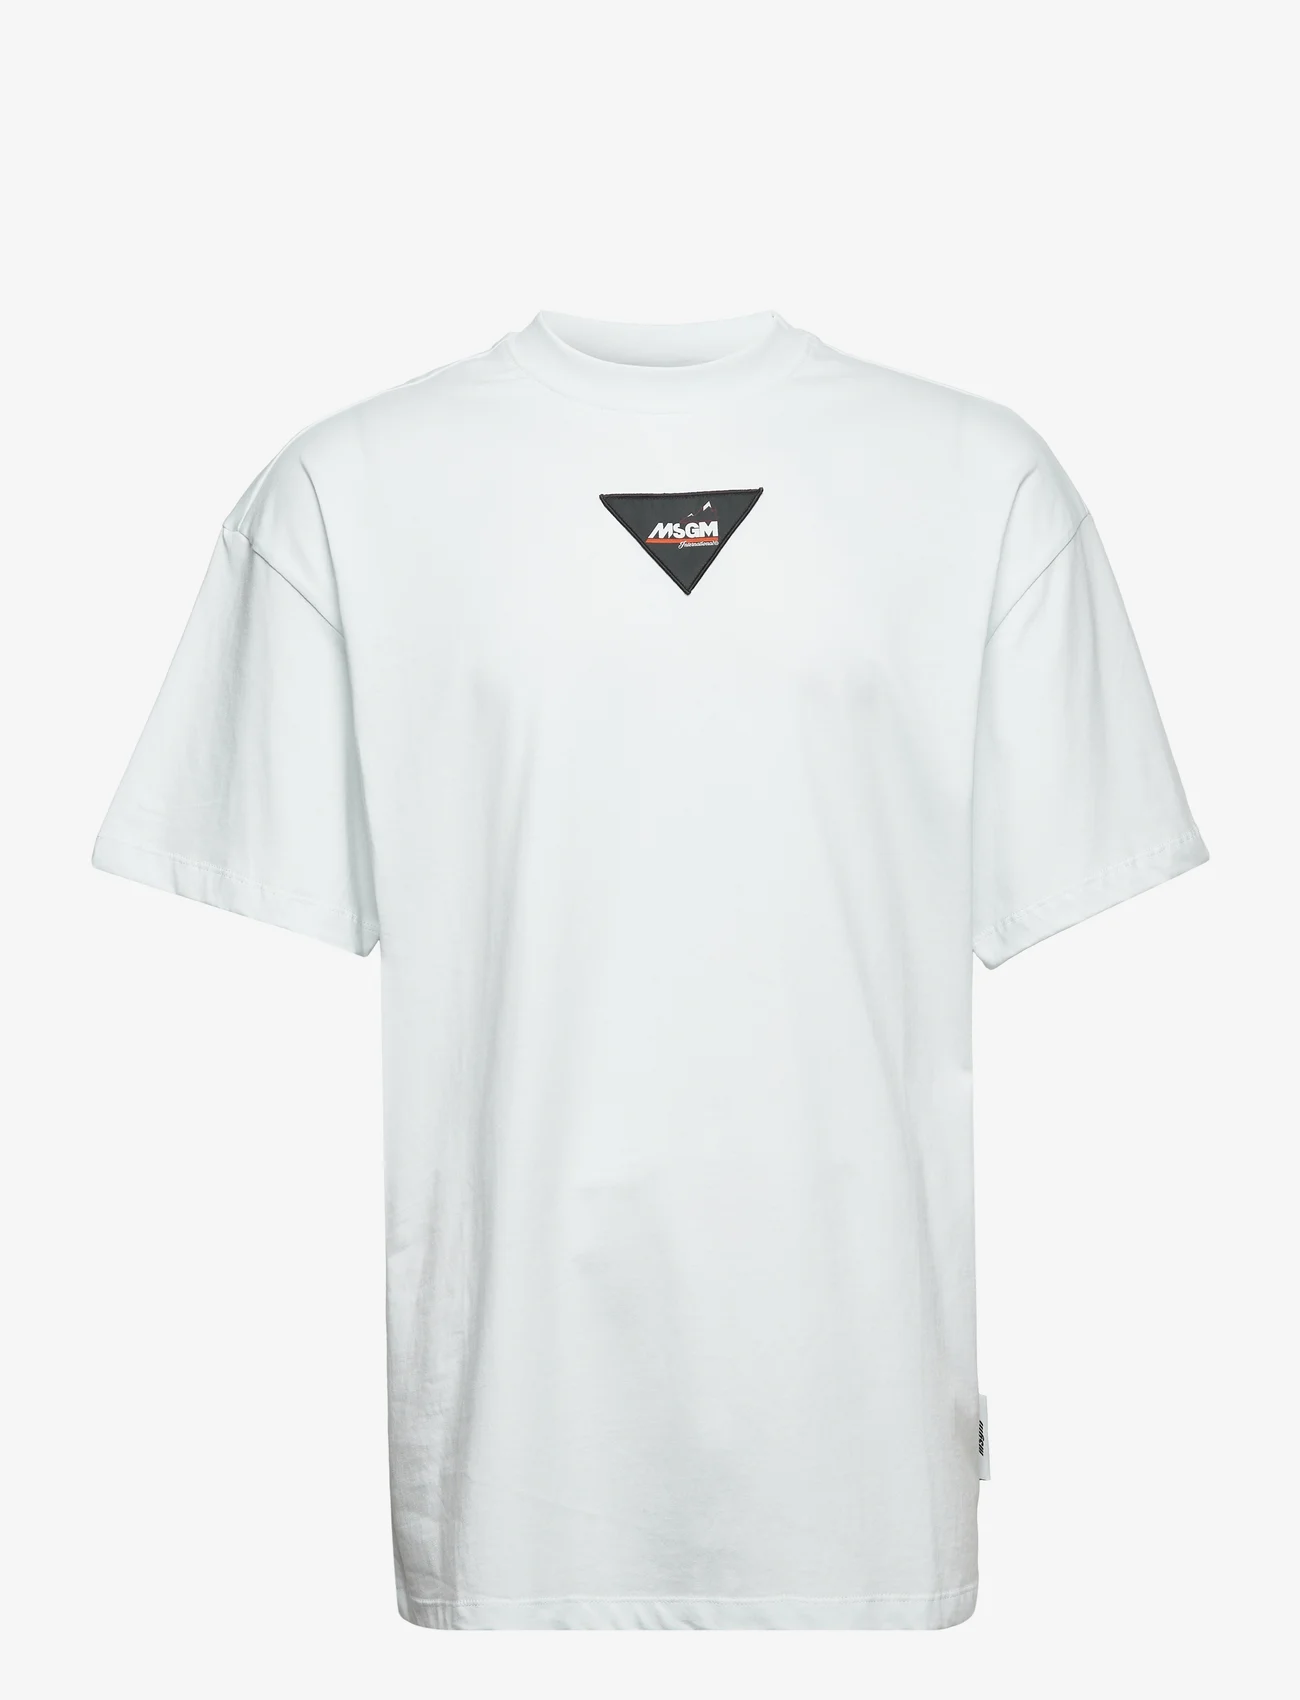 MSGM - T-SHIRT - podstawowe koszulki - white - 0